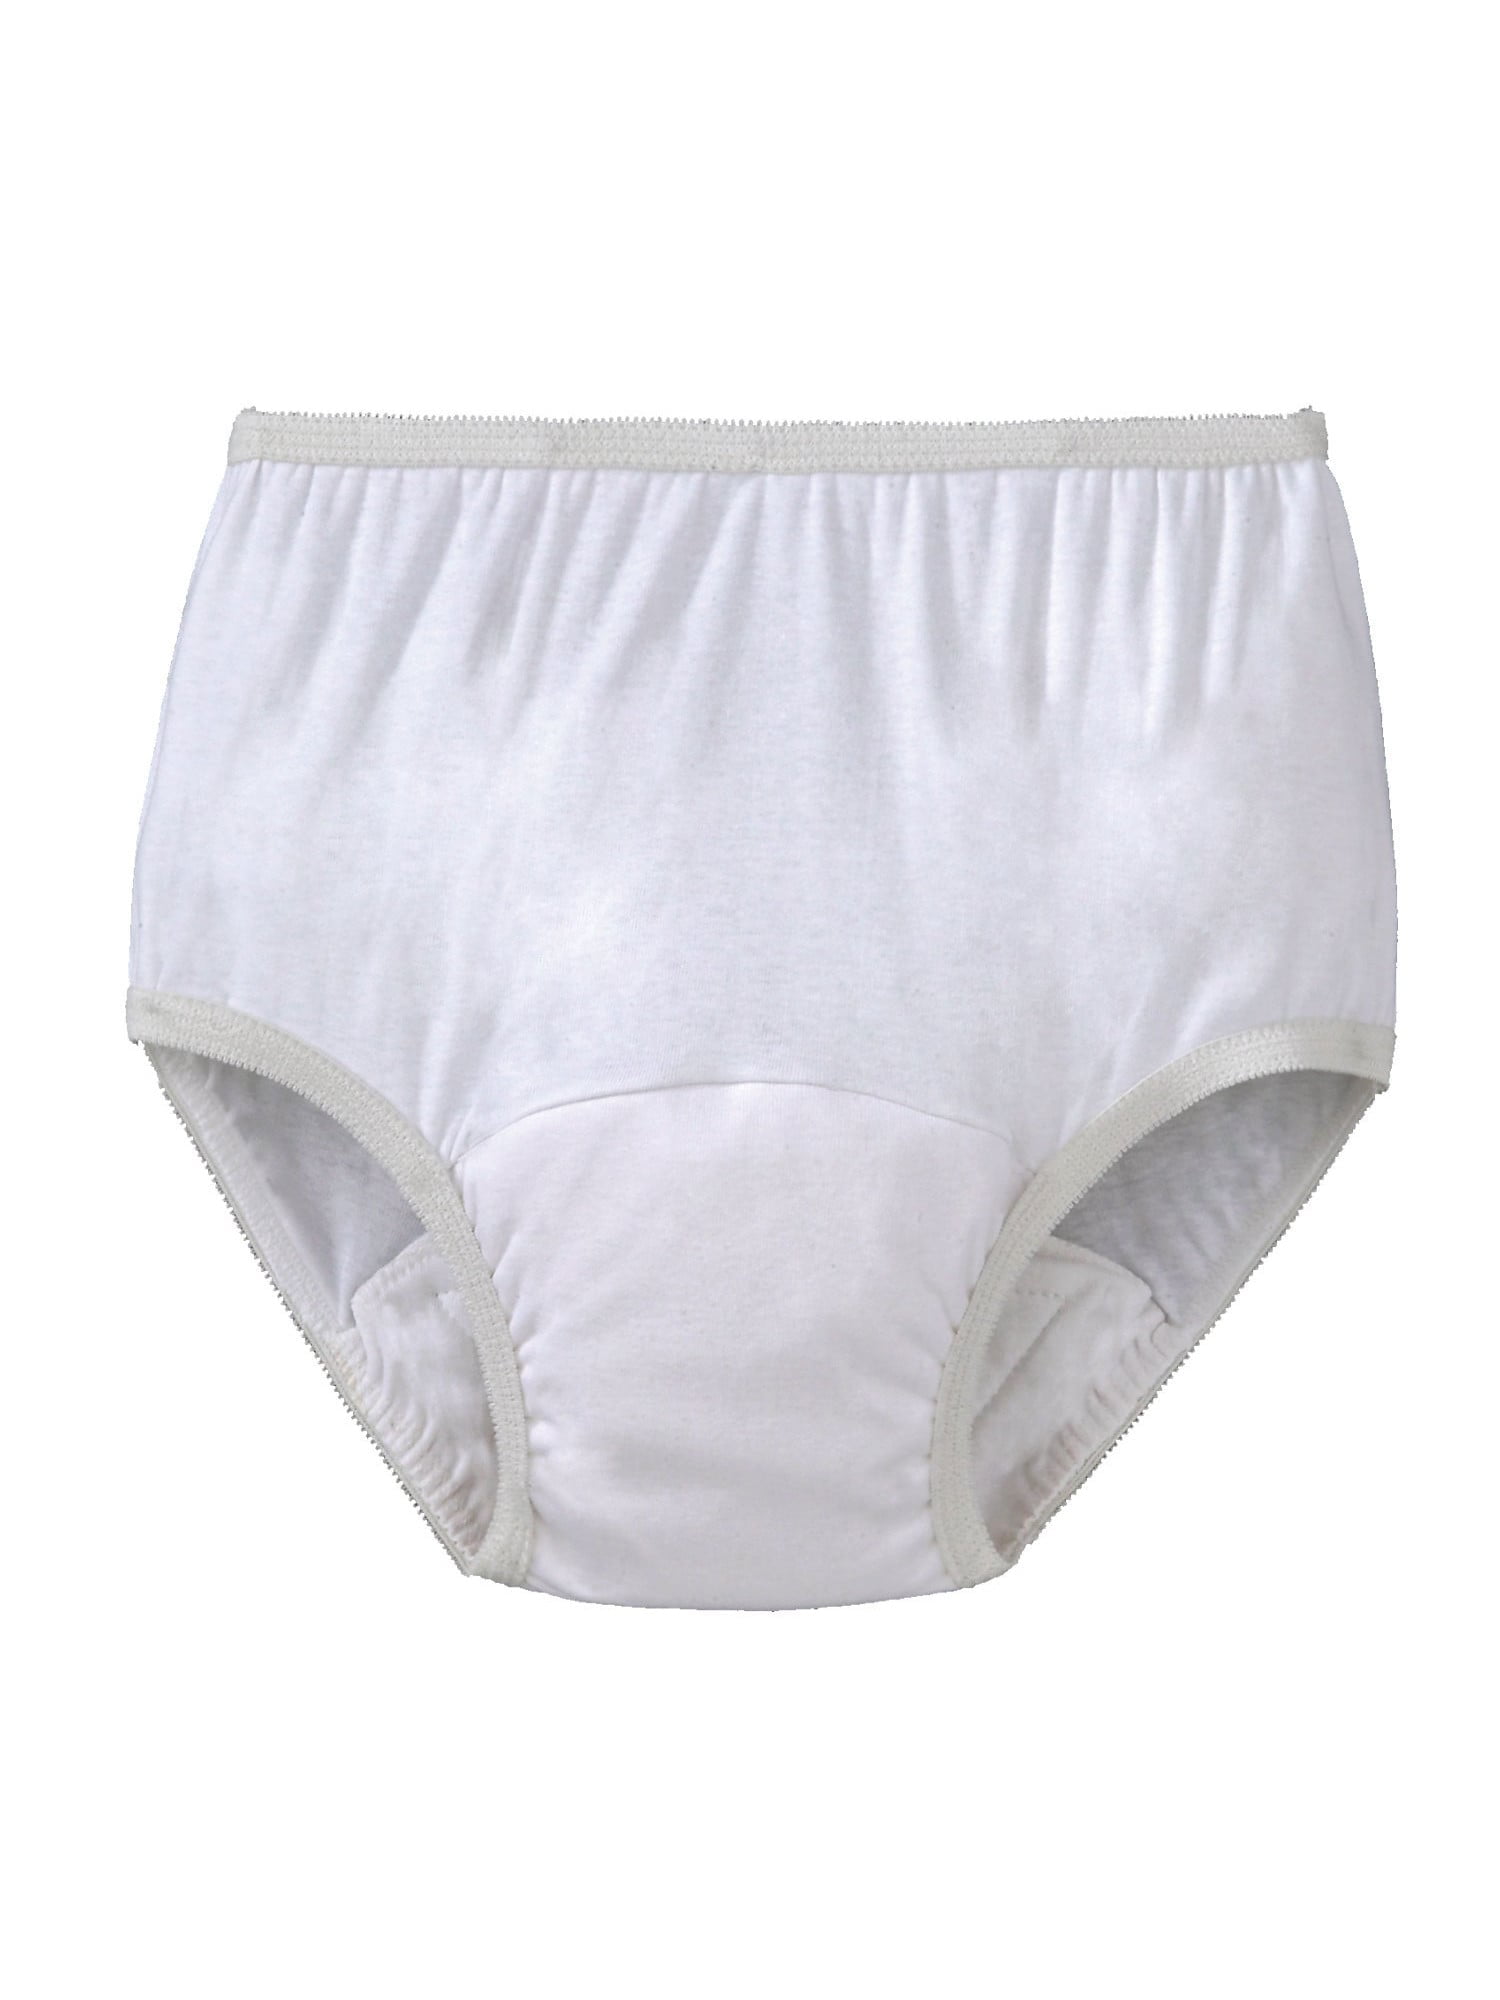 Ladies Reusable Incontinence Panty 6oz , X-Large 37-40, White, 3 PK